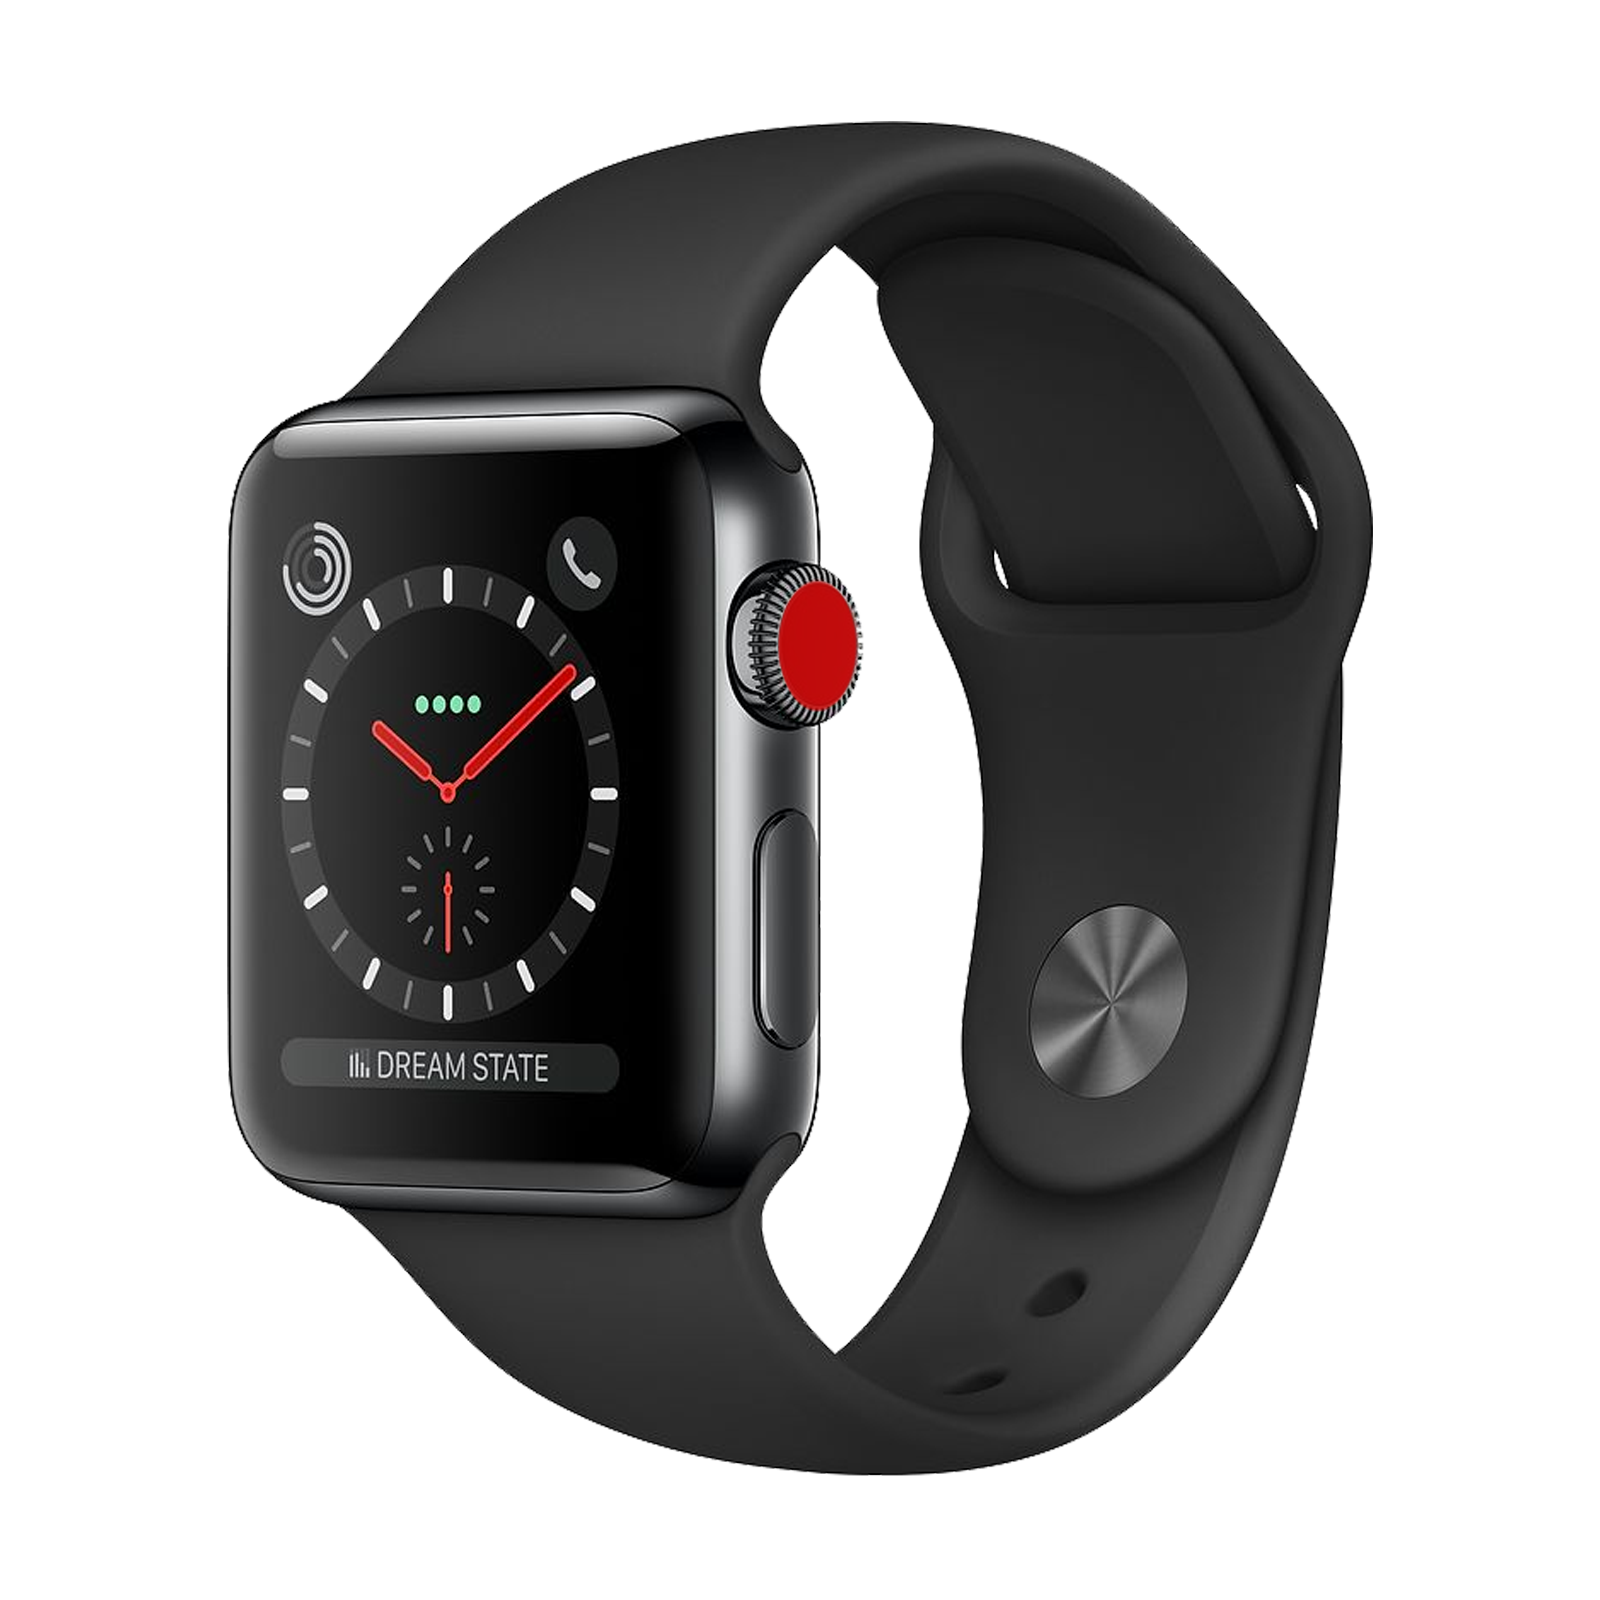 Apple Watch Series 3 Stainless 42mm Black Very Good - WiFi